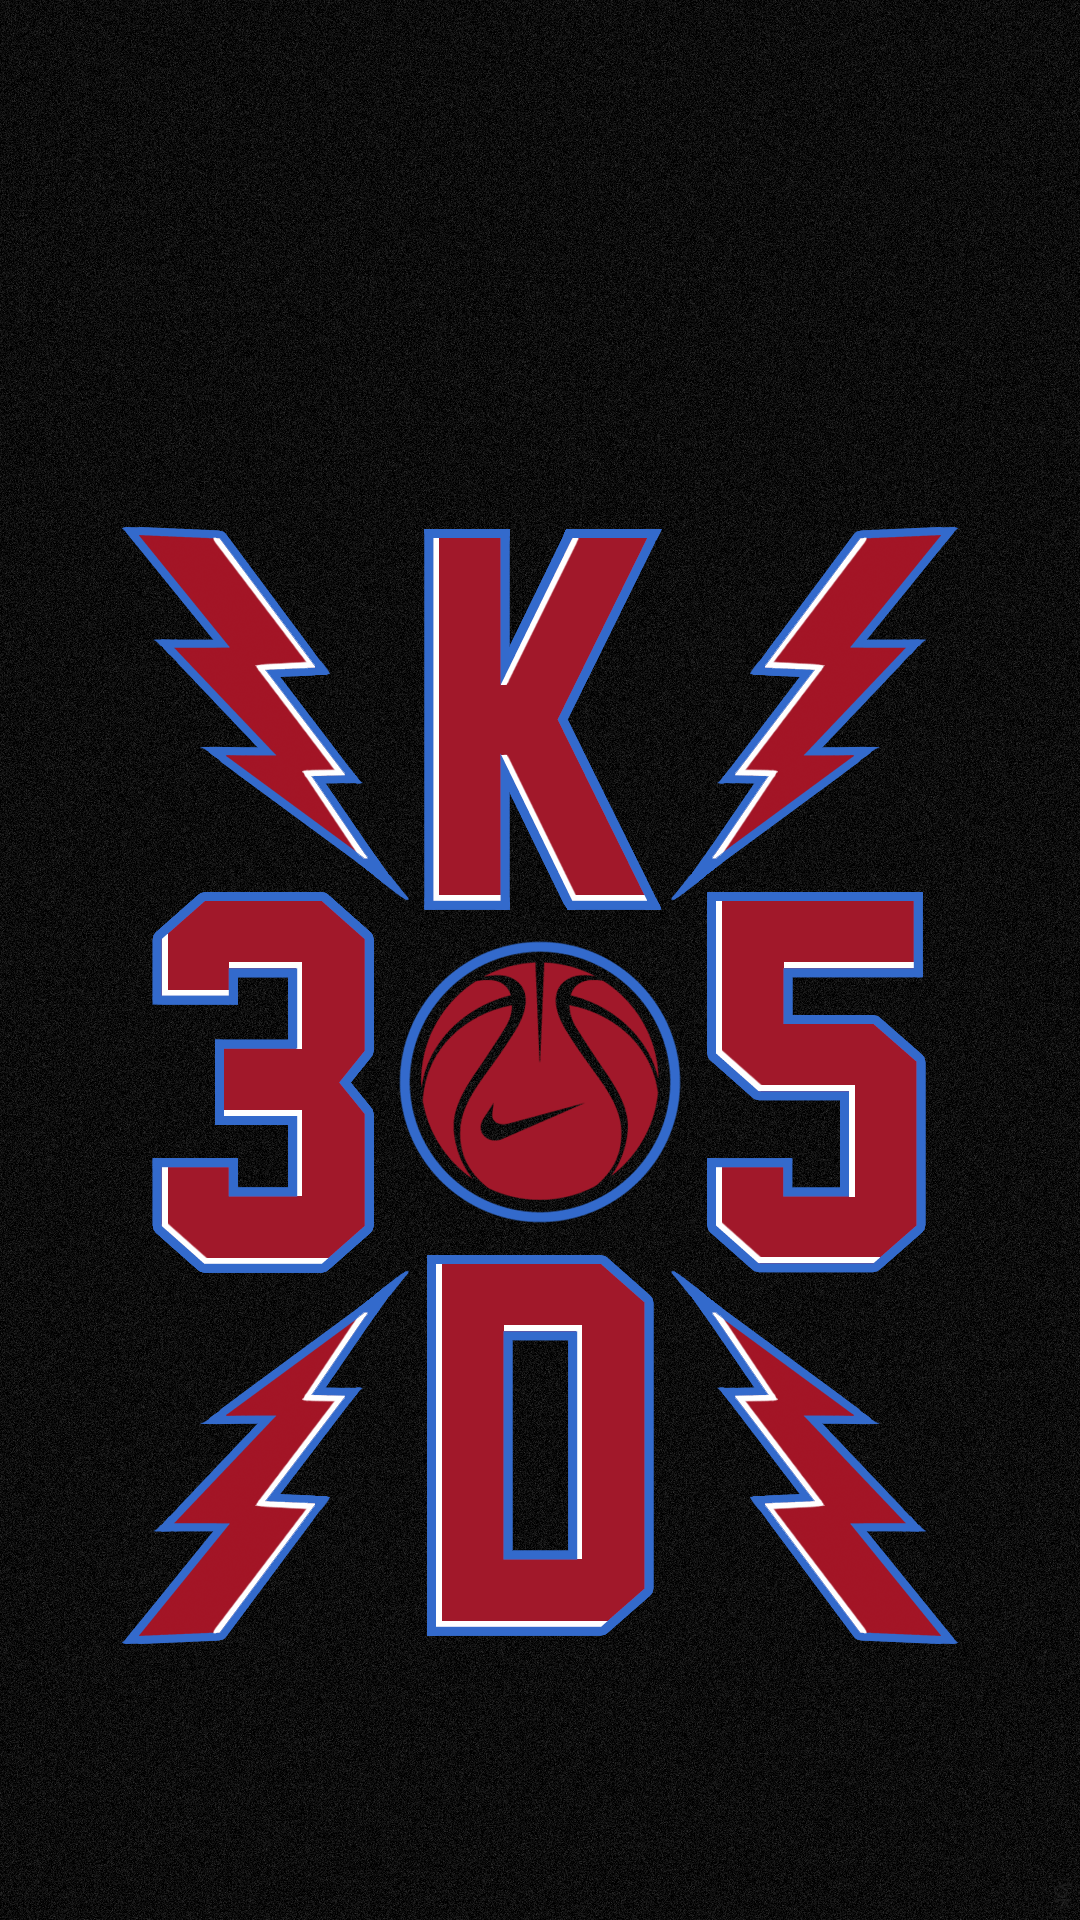 Nike KD Logo - Kevin Durant Kd Logo Wallpapers - Wallpaper Cave